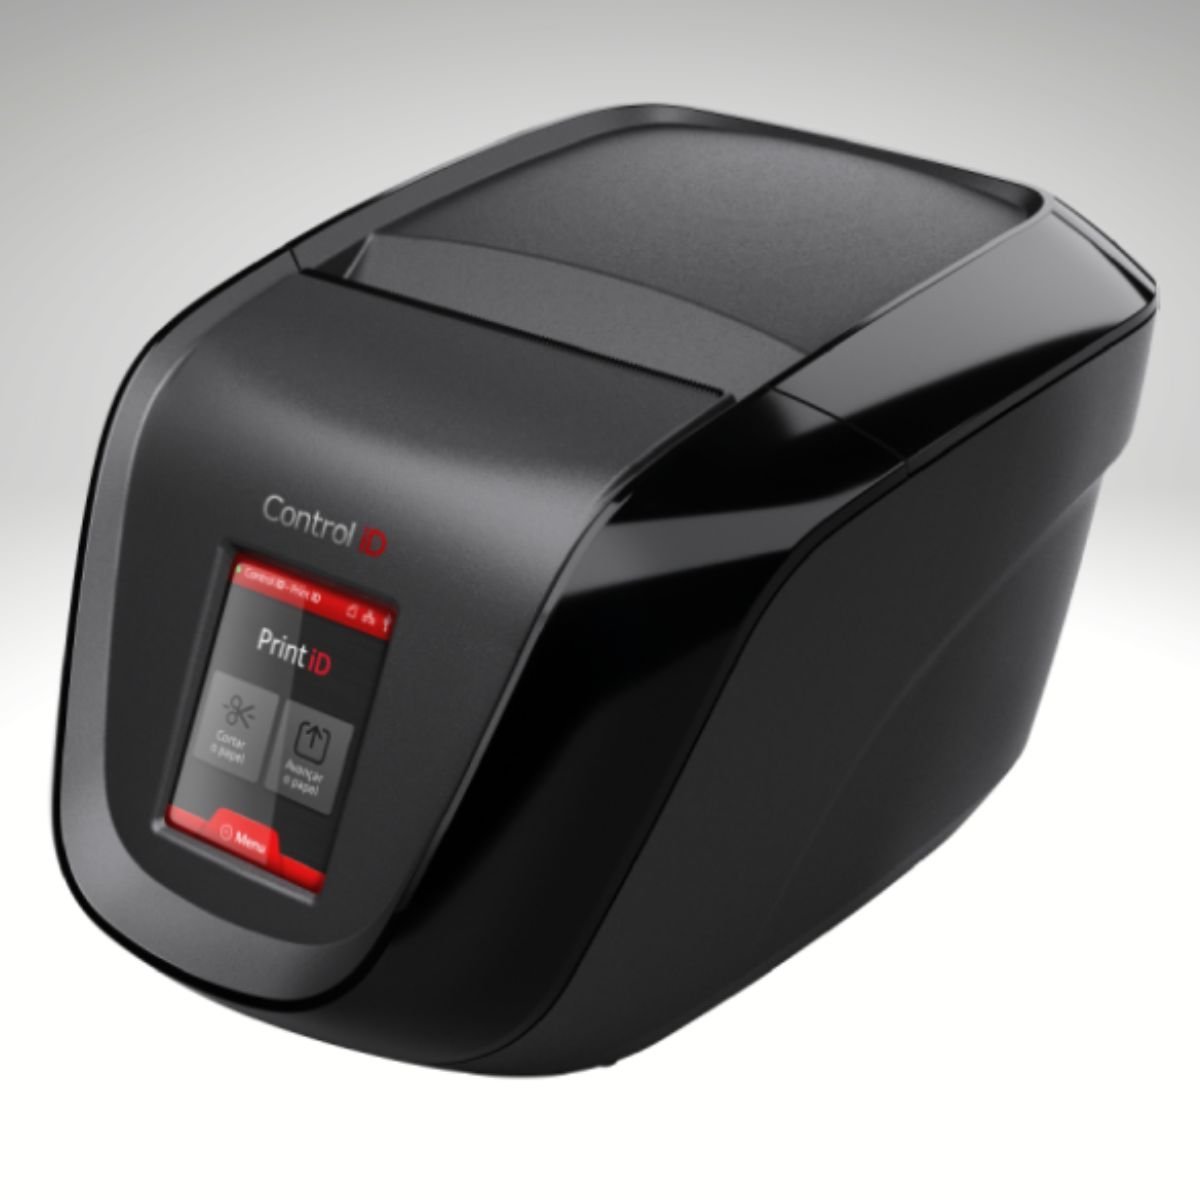 Impressora Térmica Cupom Touch USB/Rede/Wi-Fi/Bluetooth - Control iD Print iD Touch - 1